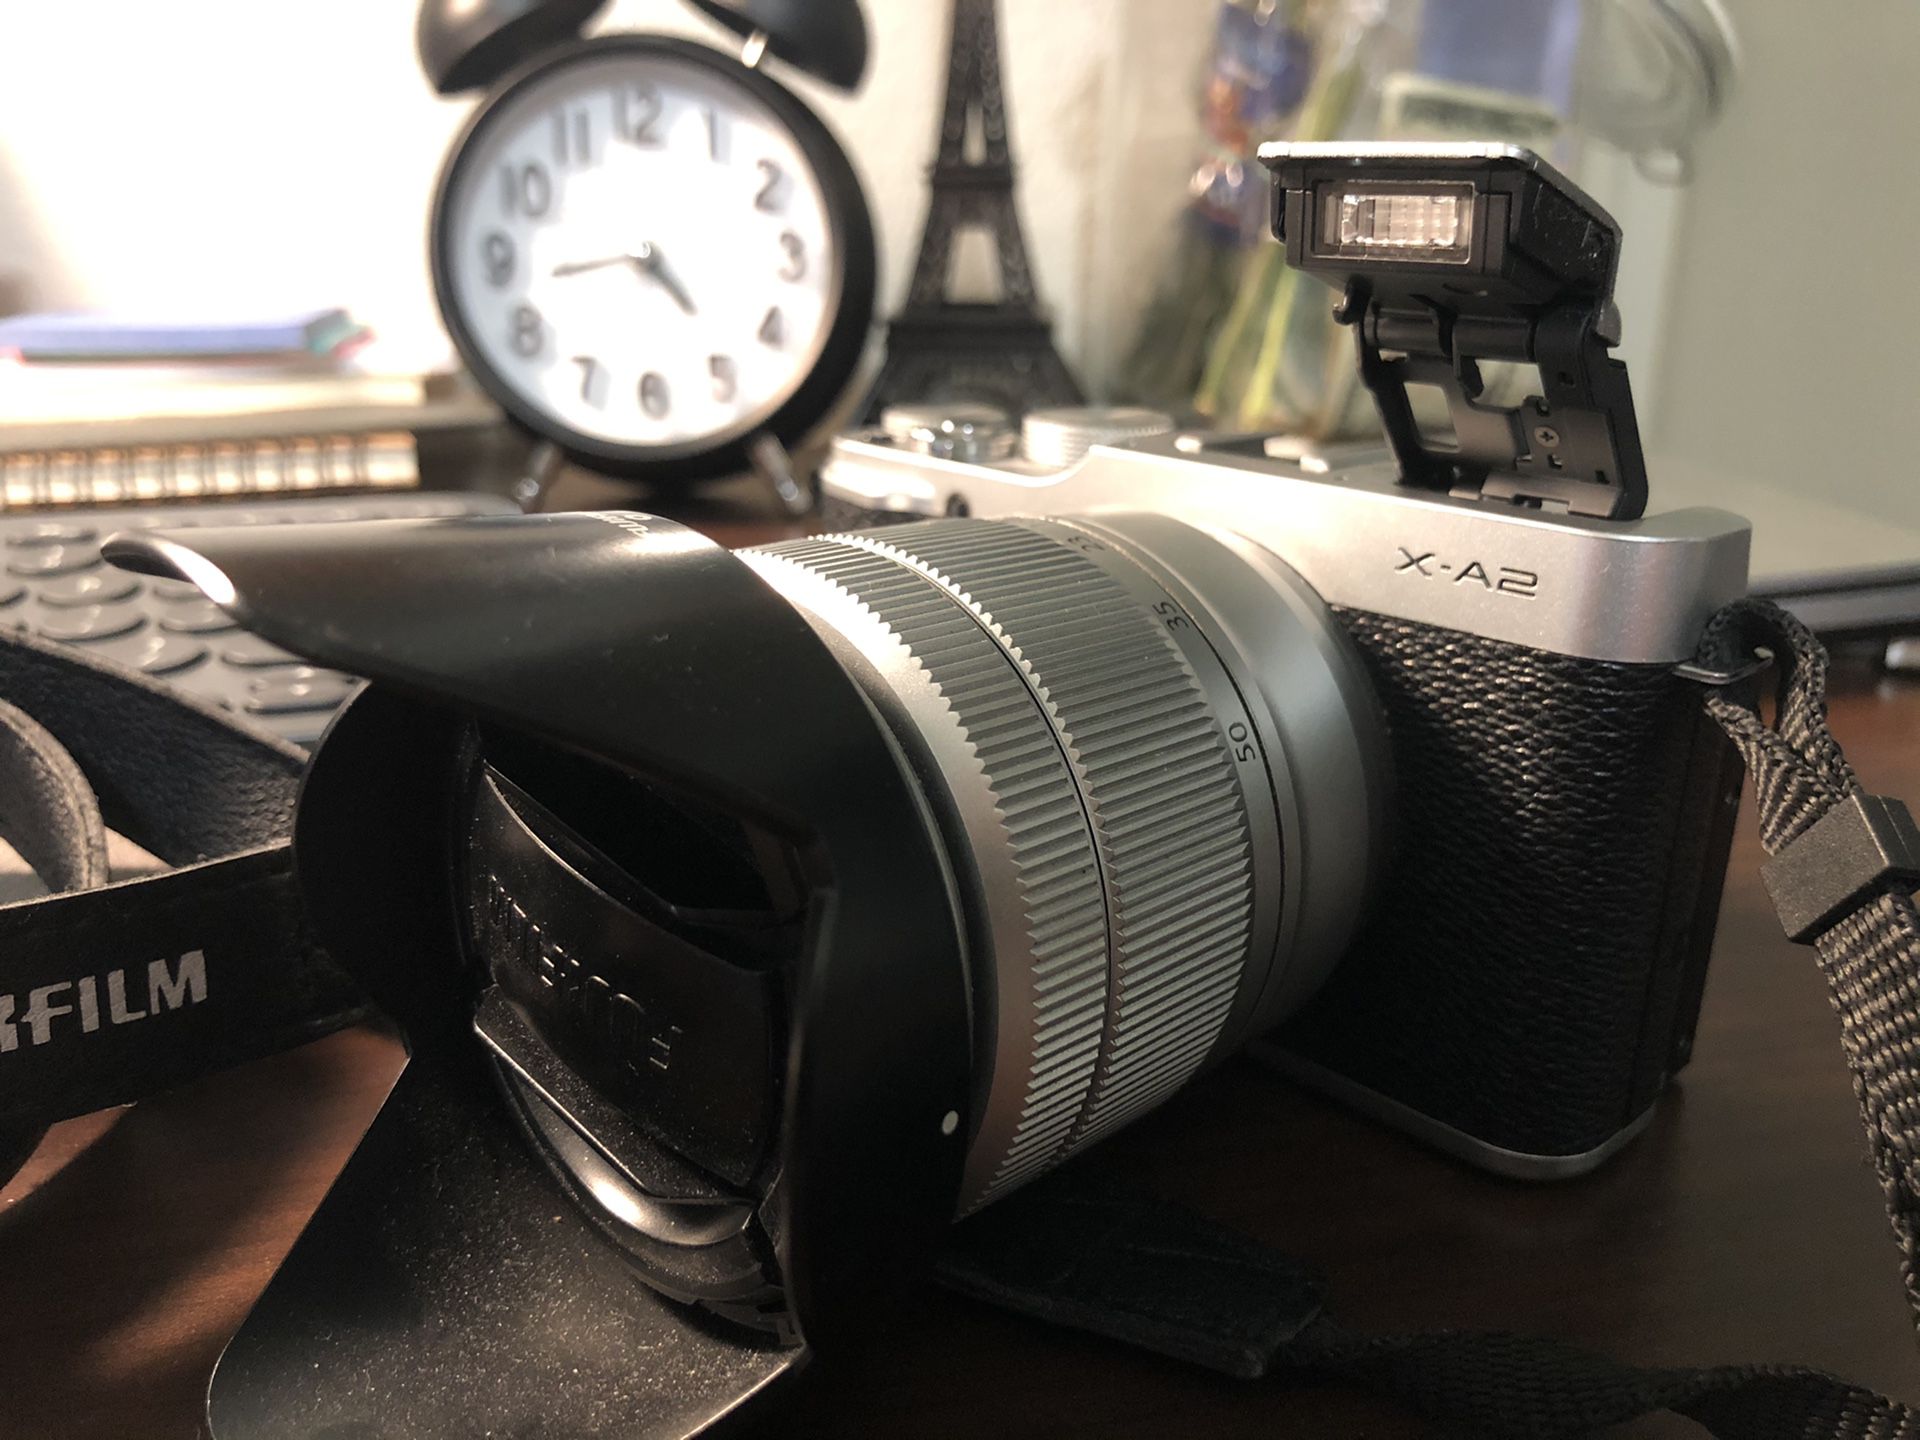 Fujifilm X-A2 Mirrorless Digital Camera $200